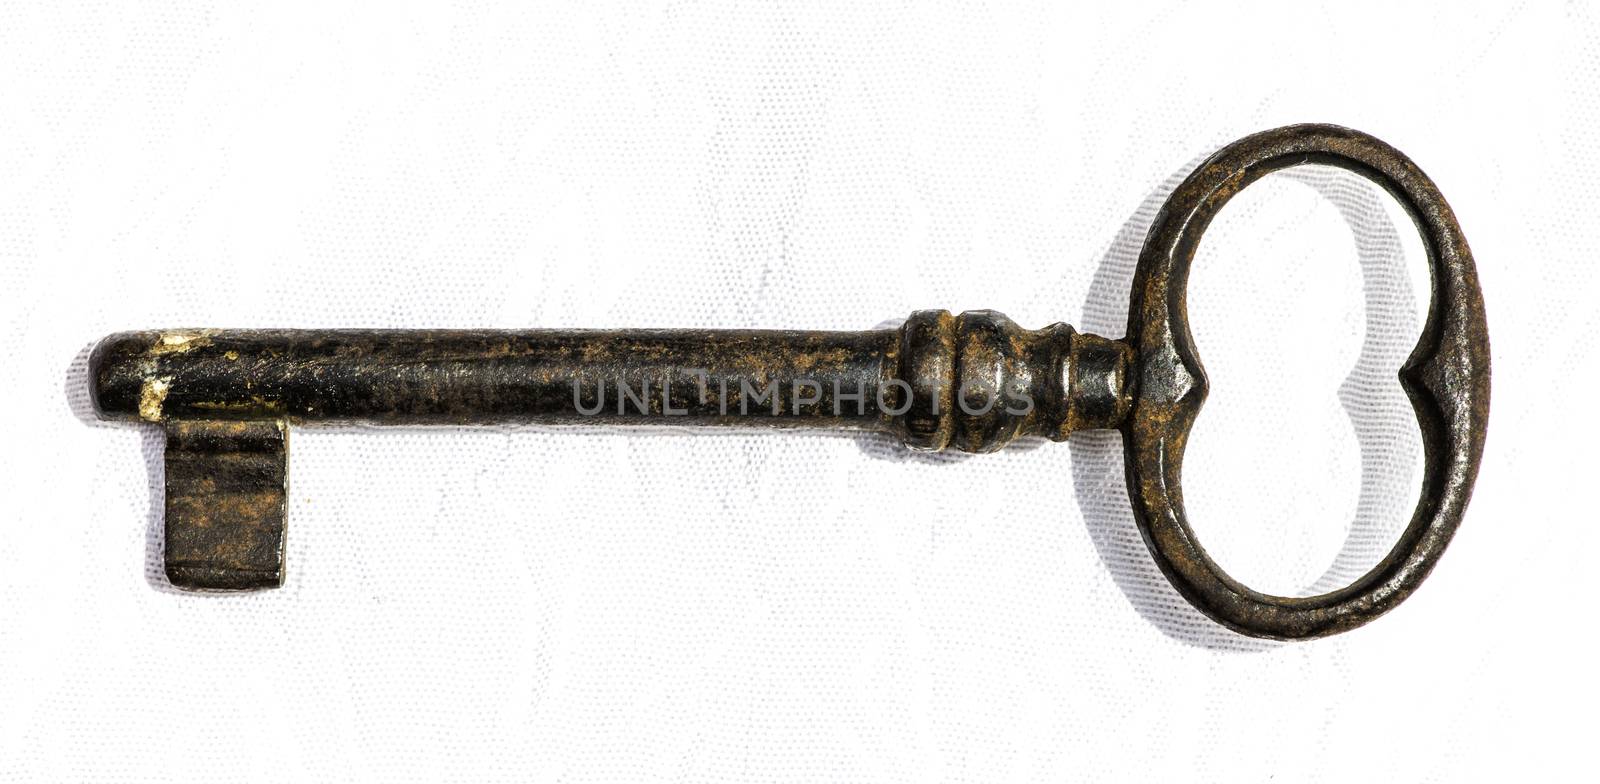 Old antique key by deyan_georgiev